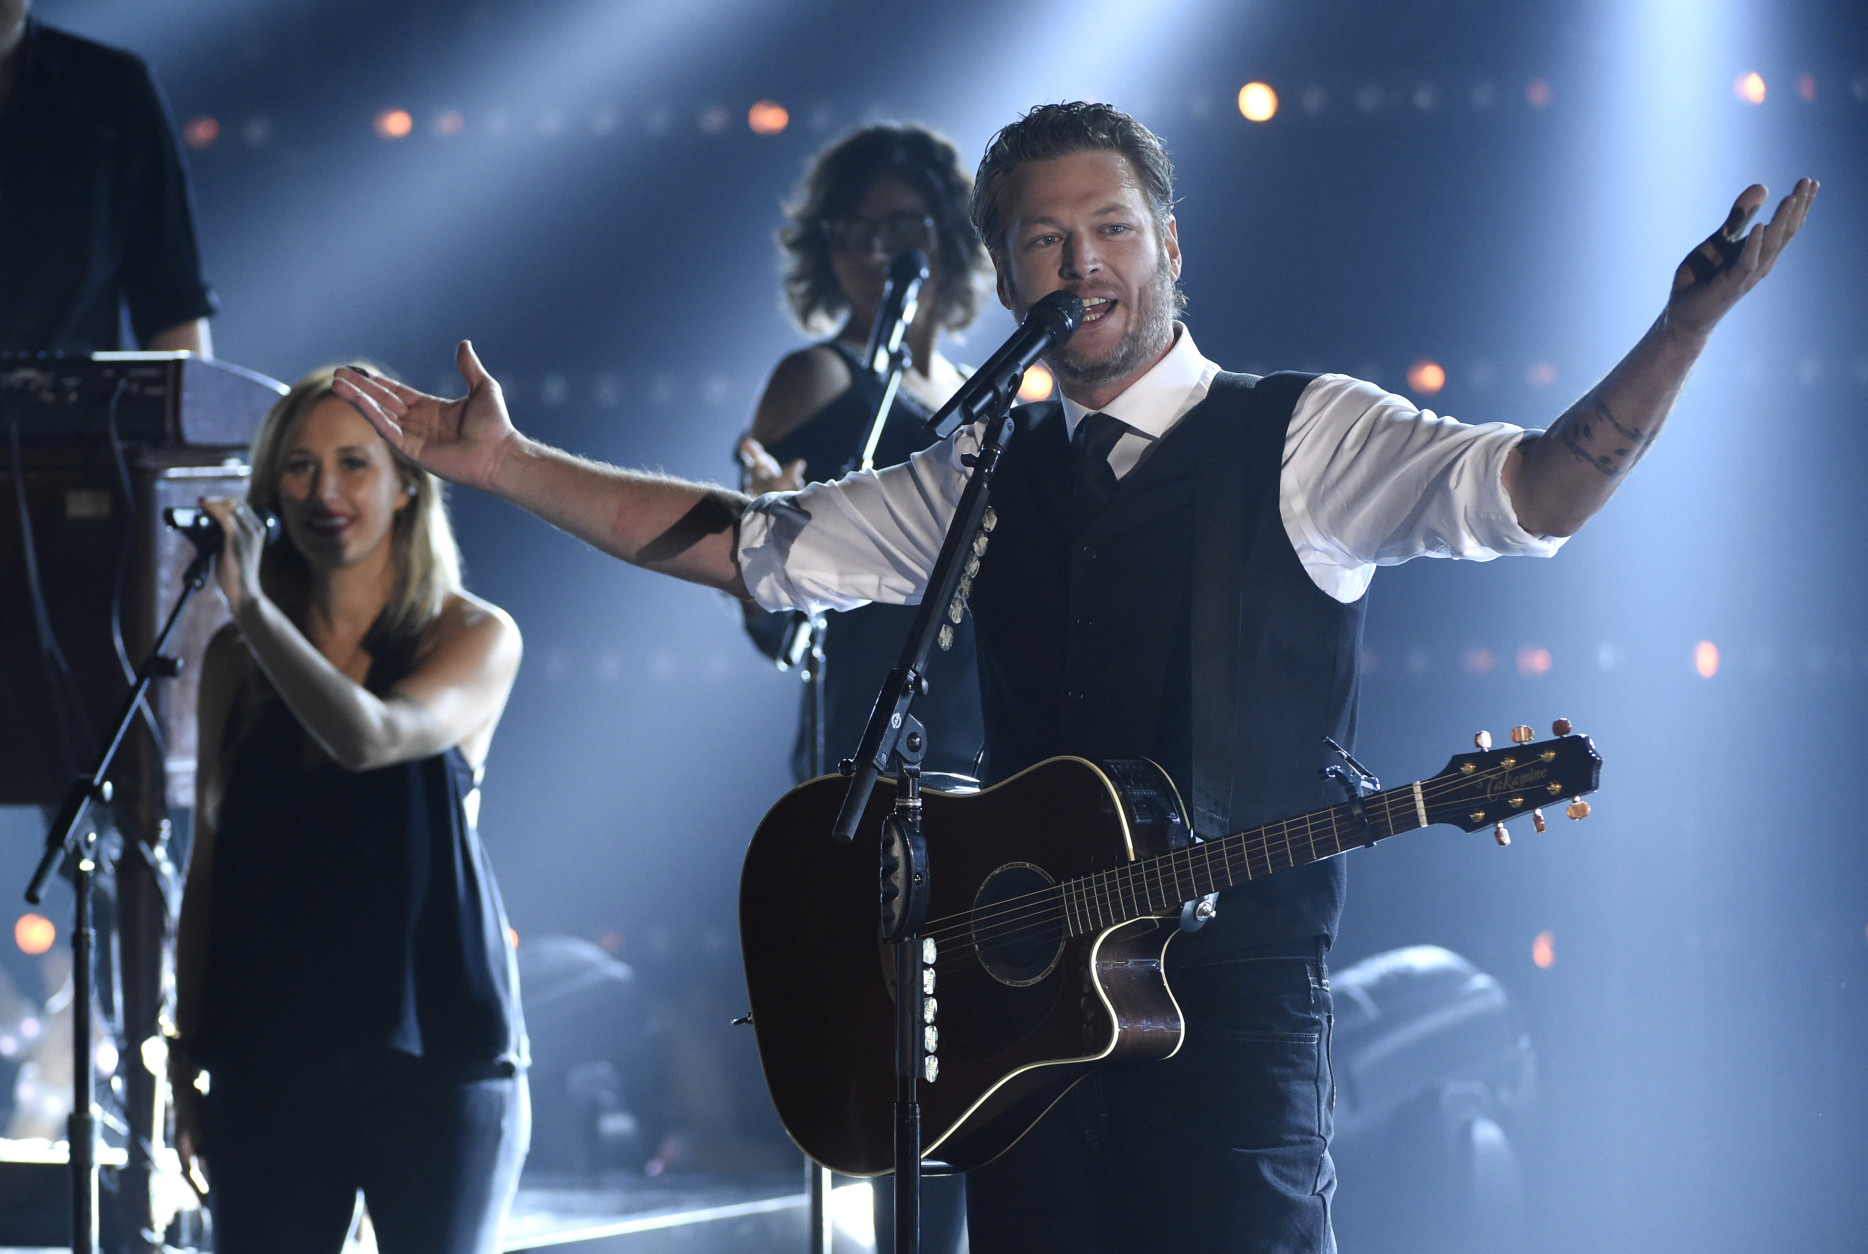 Blake Shelton performs at the 49th annual CMA Awards at the Bridgestone Arena on Wednesday, Nov. 4, 2015, in Nashville, Tenn. (Photo by Chris Pizzello/Invision/AP)